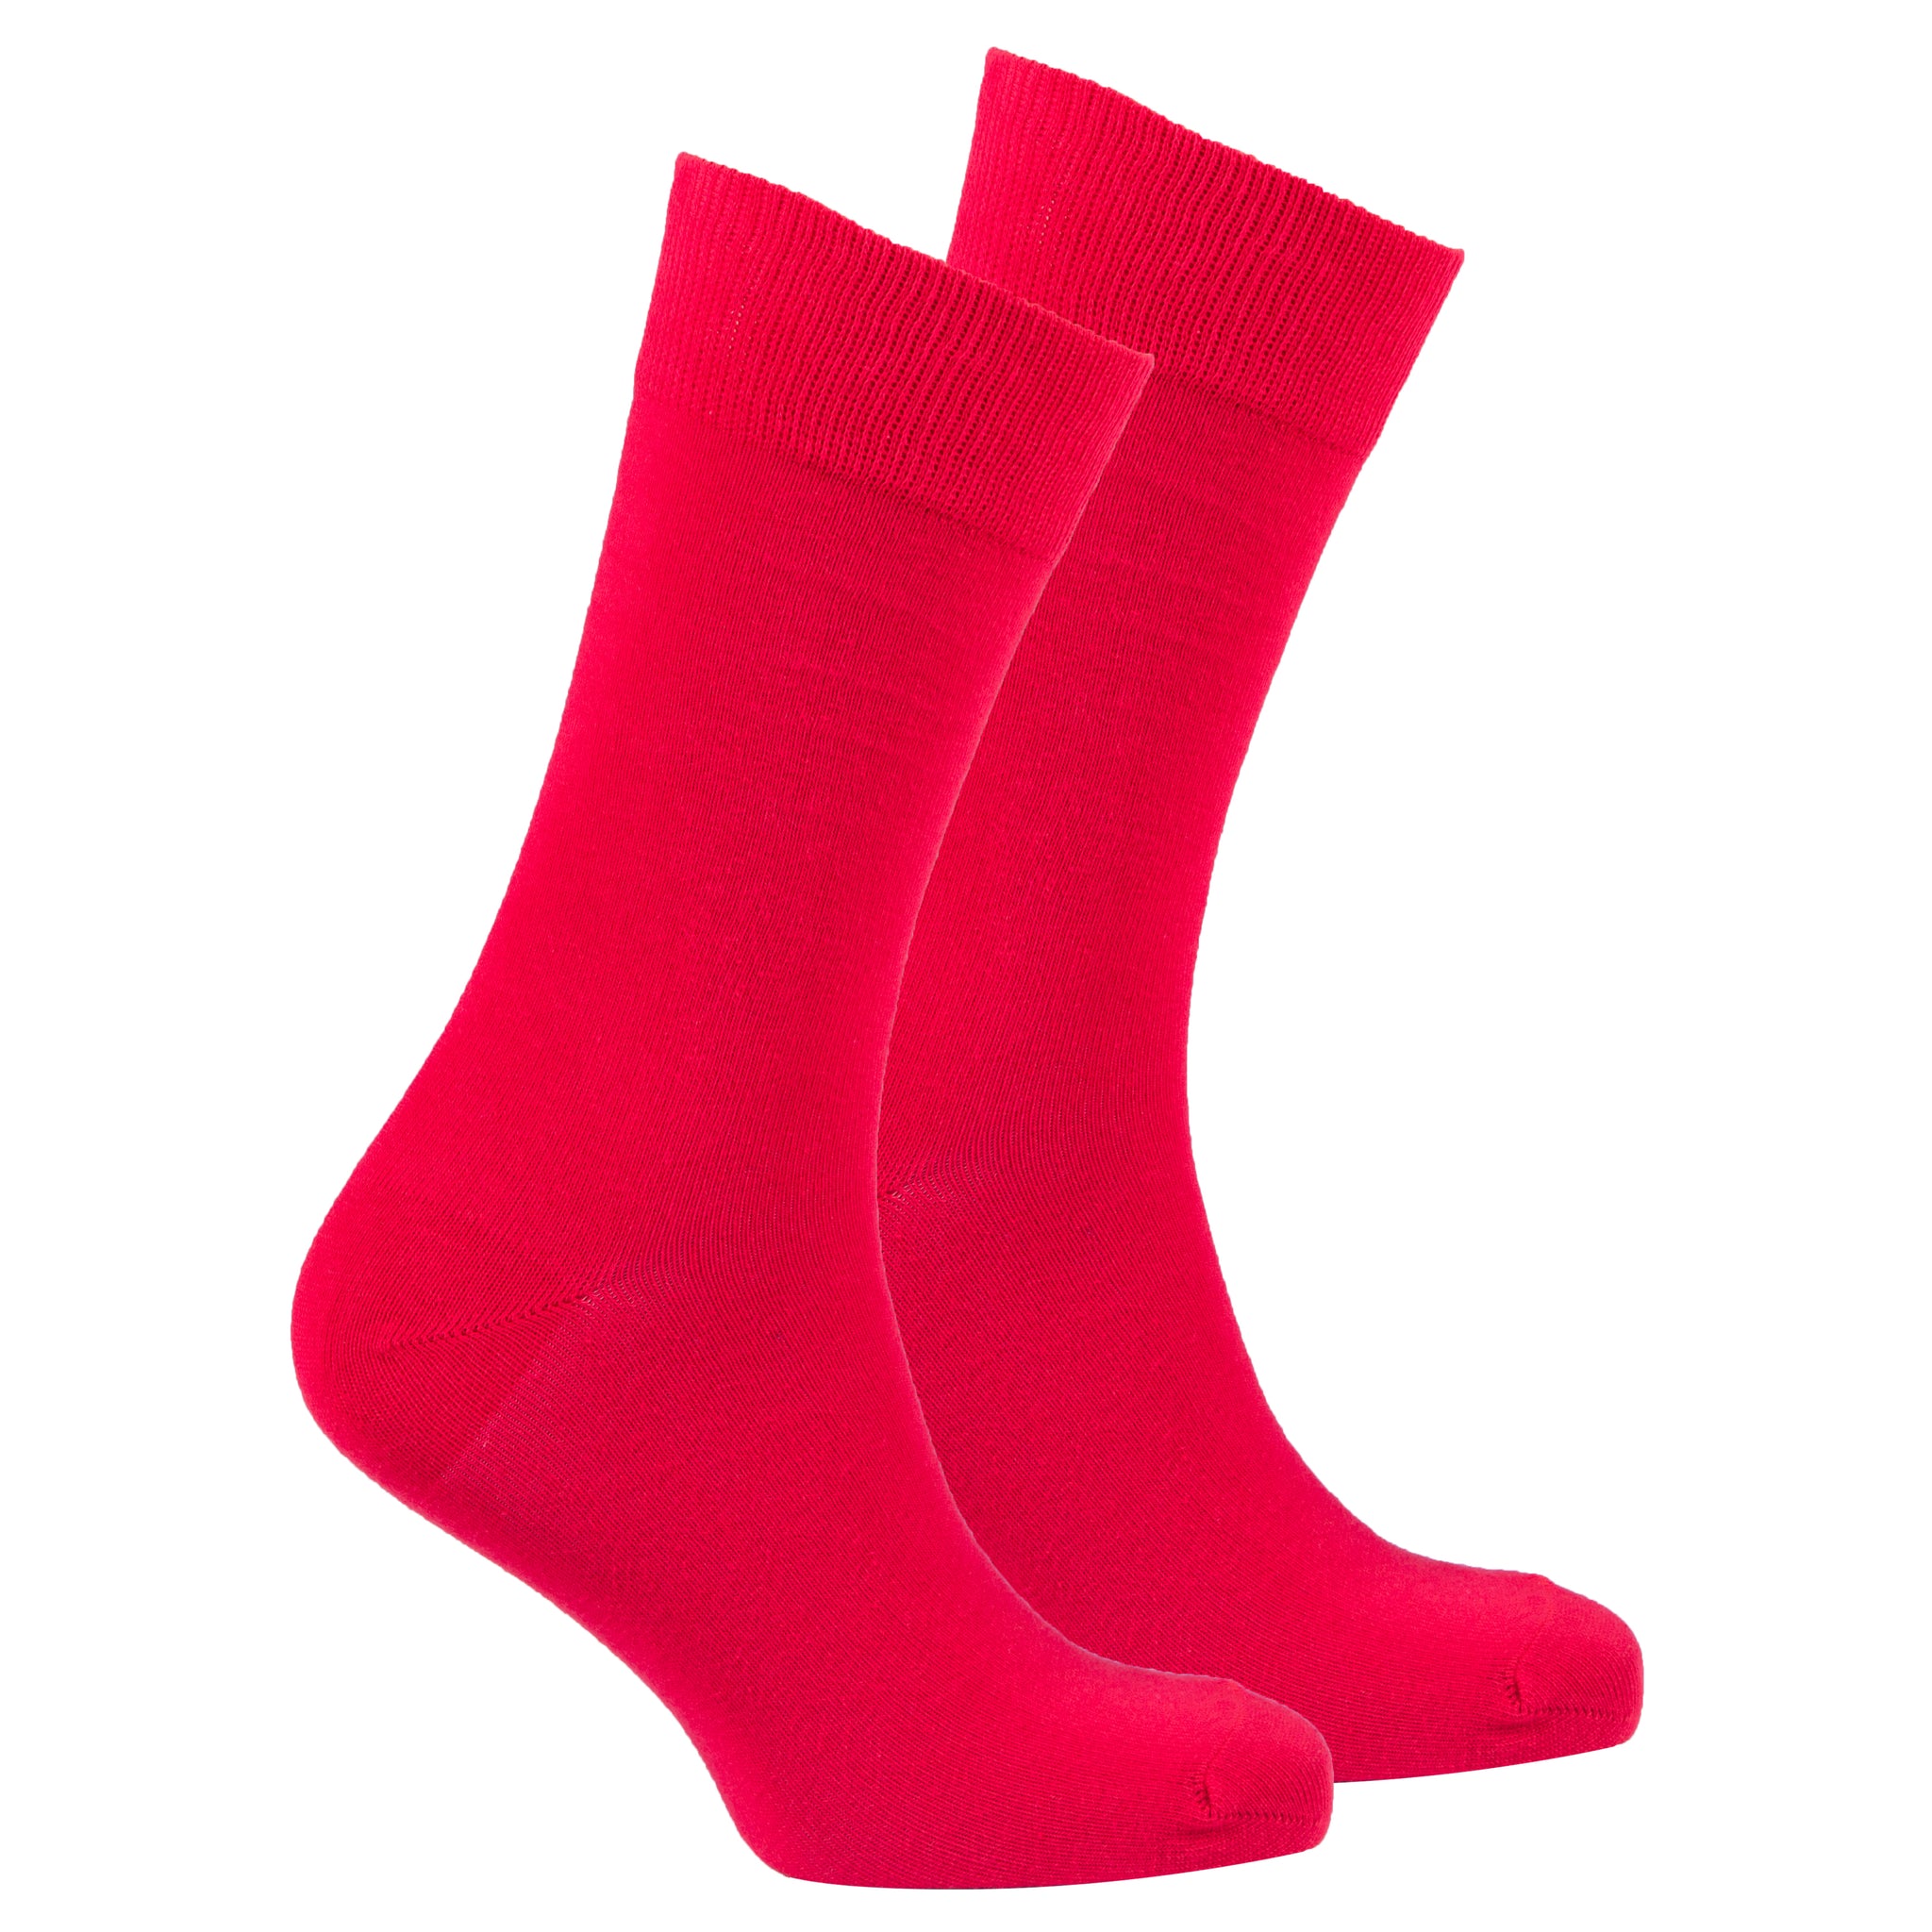 Men's Solid Red Socks